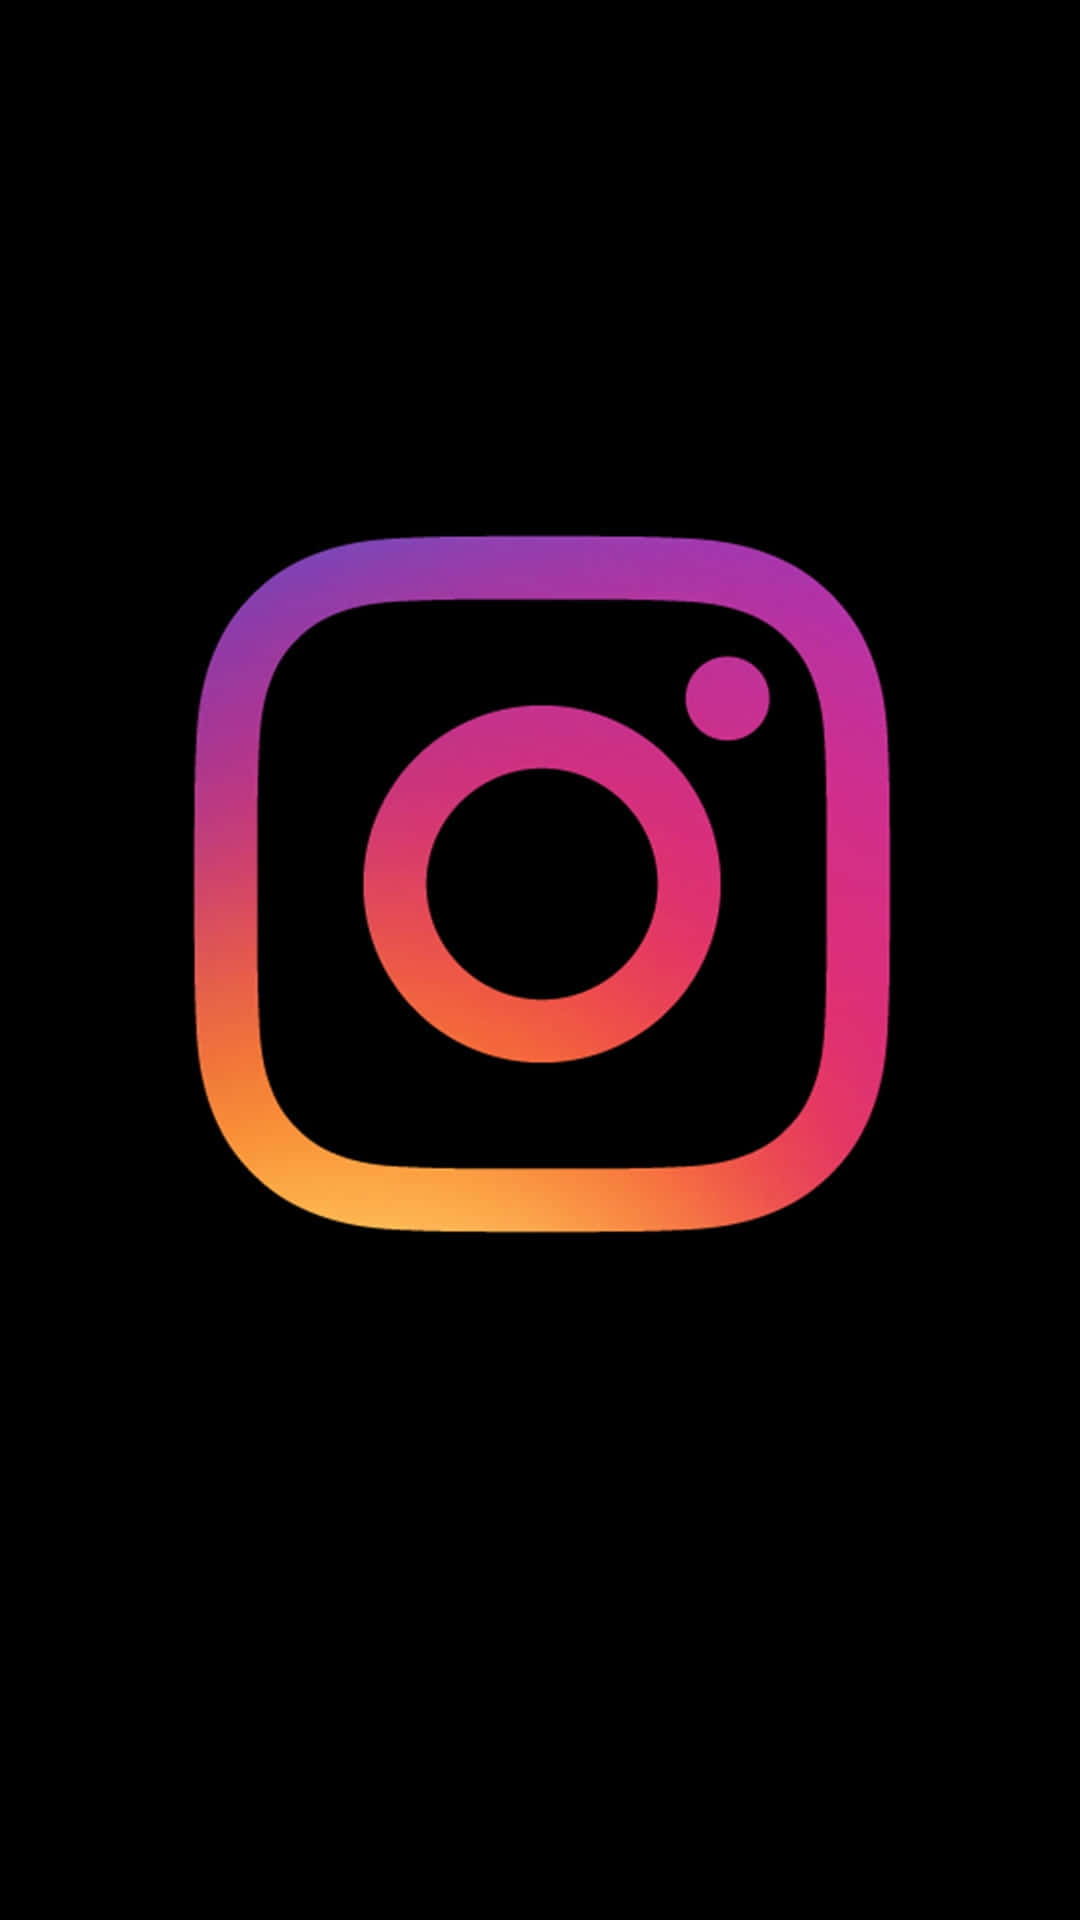 100+] Instagram Black Background s | Wallpapers.com